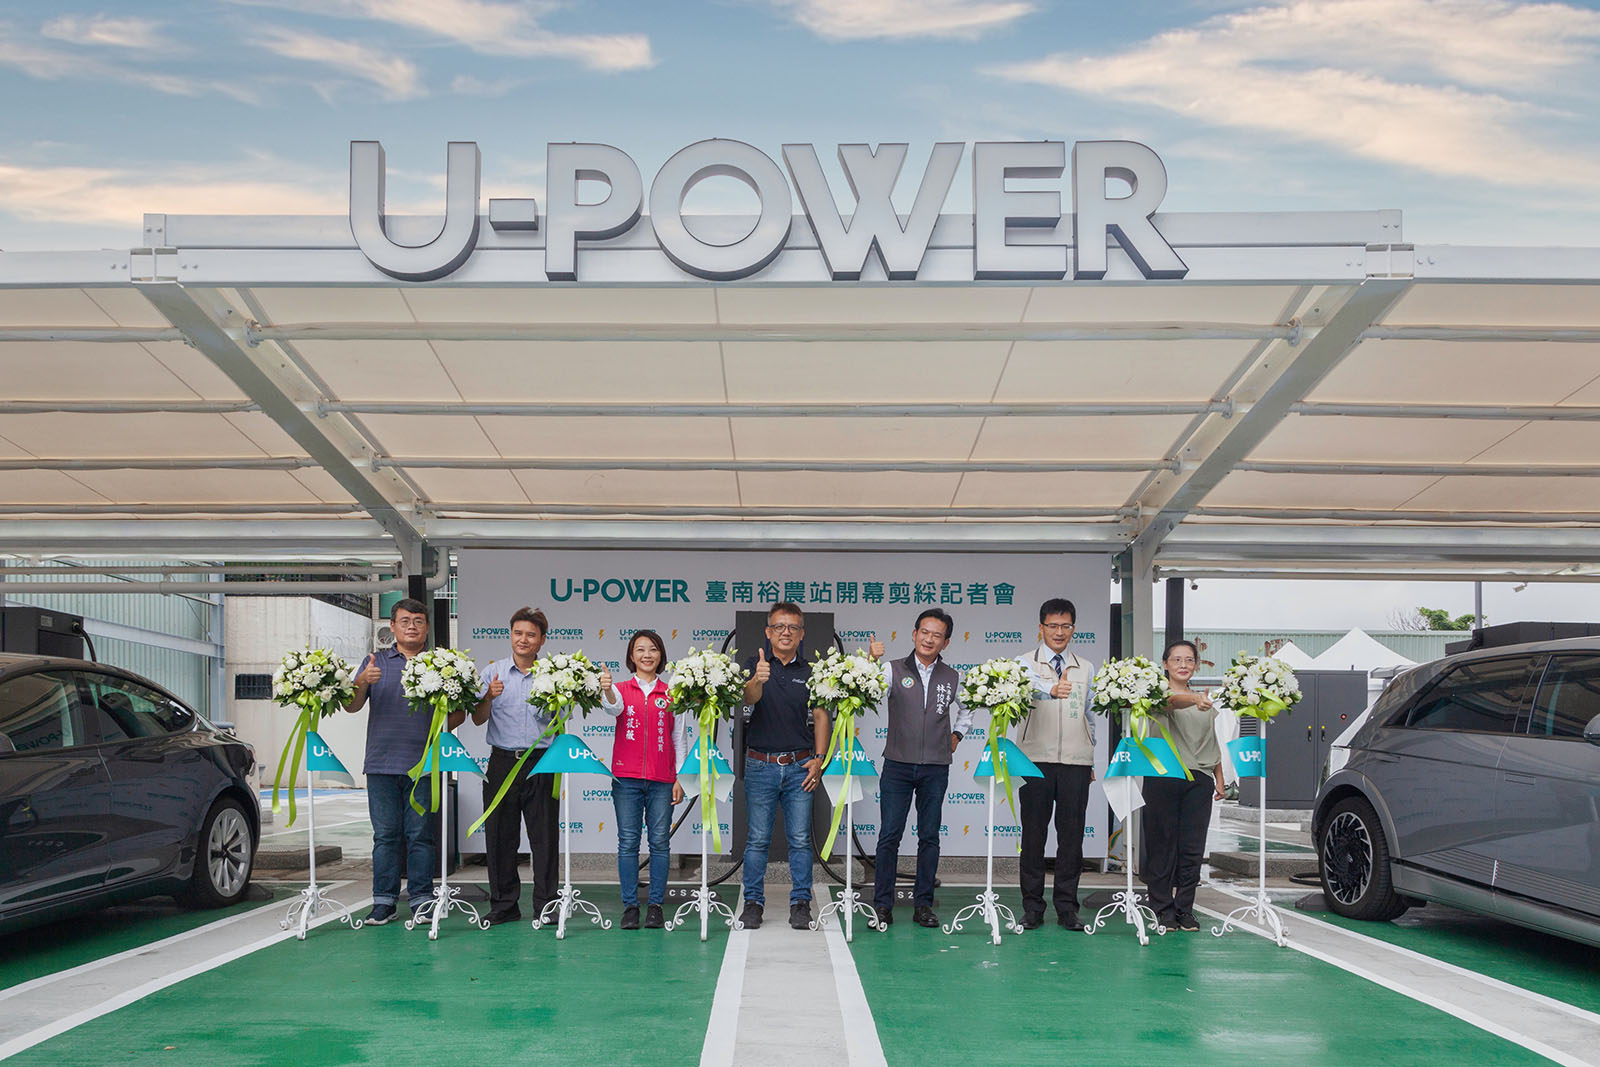 U-POWER 臺南裕農站首創業界最高 720kW 功率正式開幕啟用